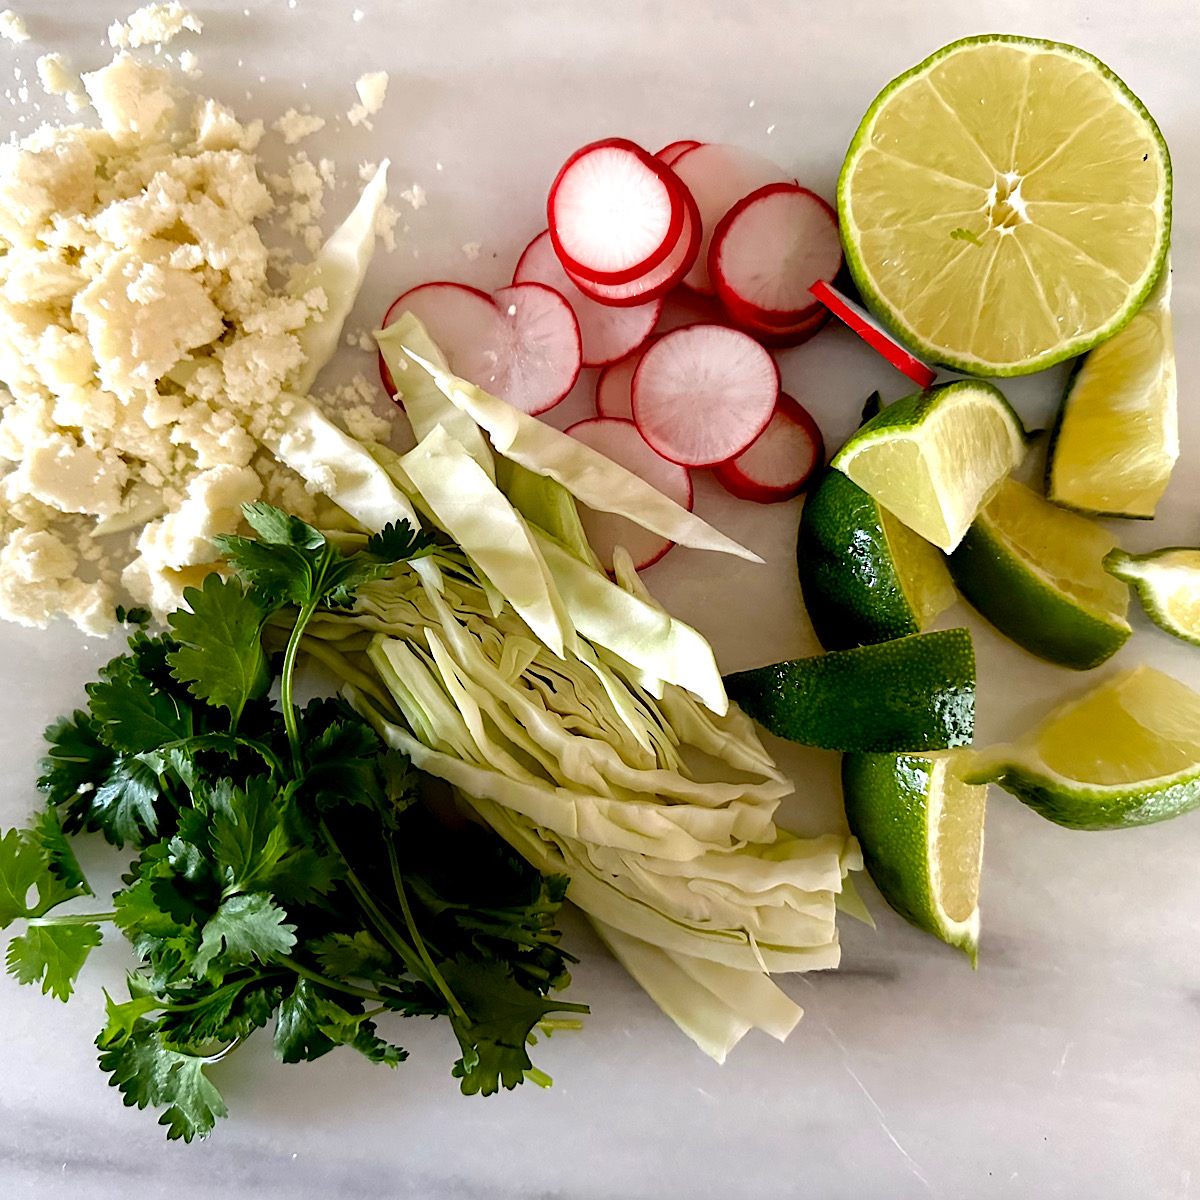 Pozole garnishes; cheese, radish, lime, cabbage and cilantro